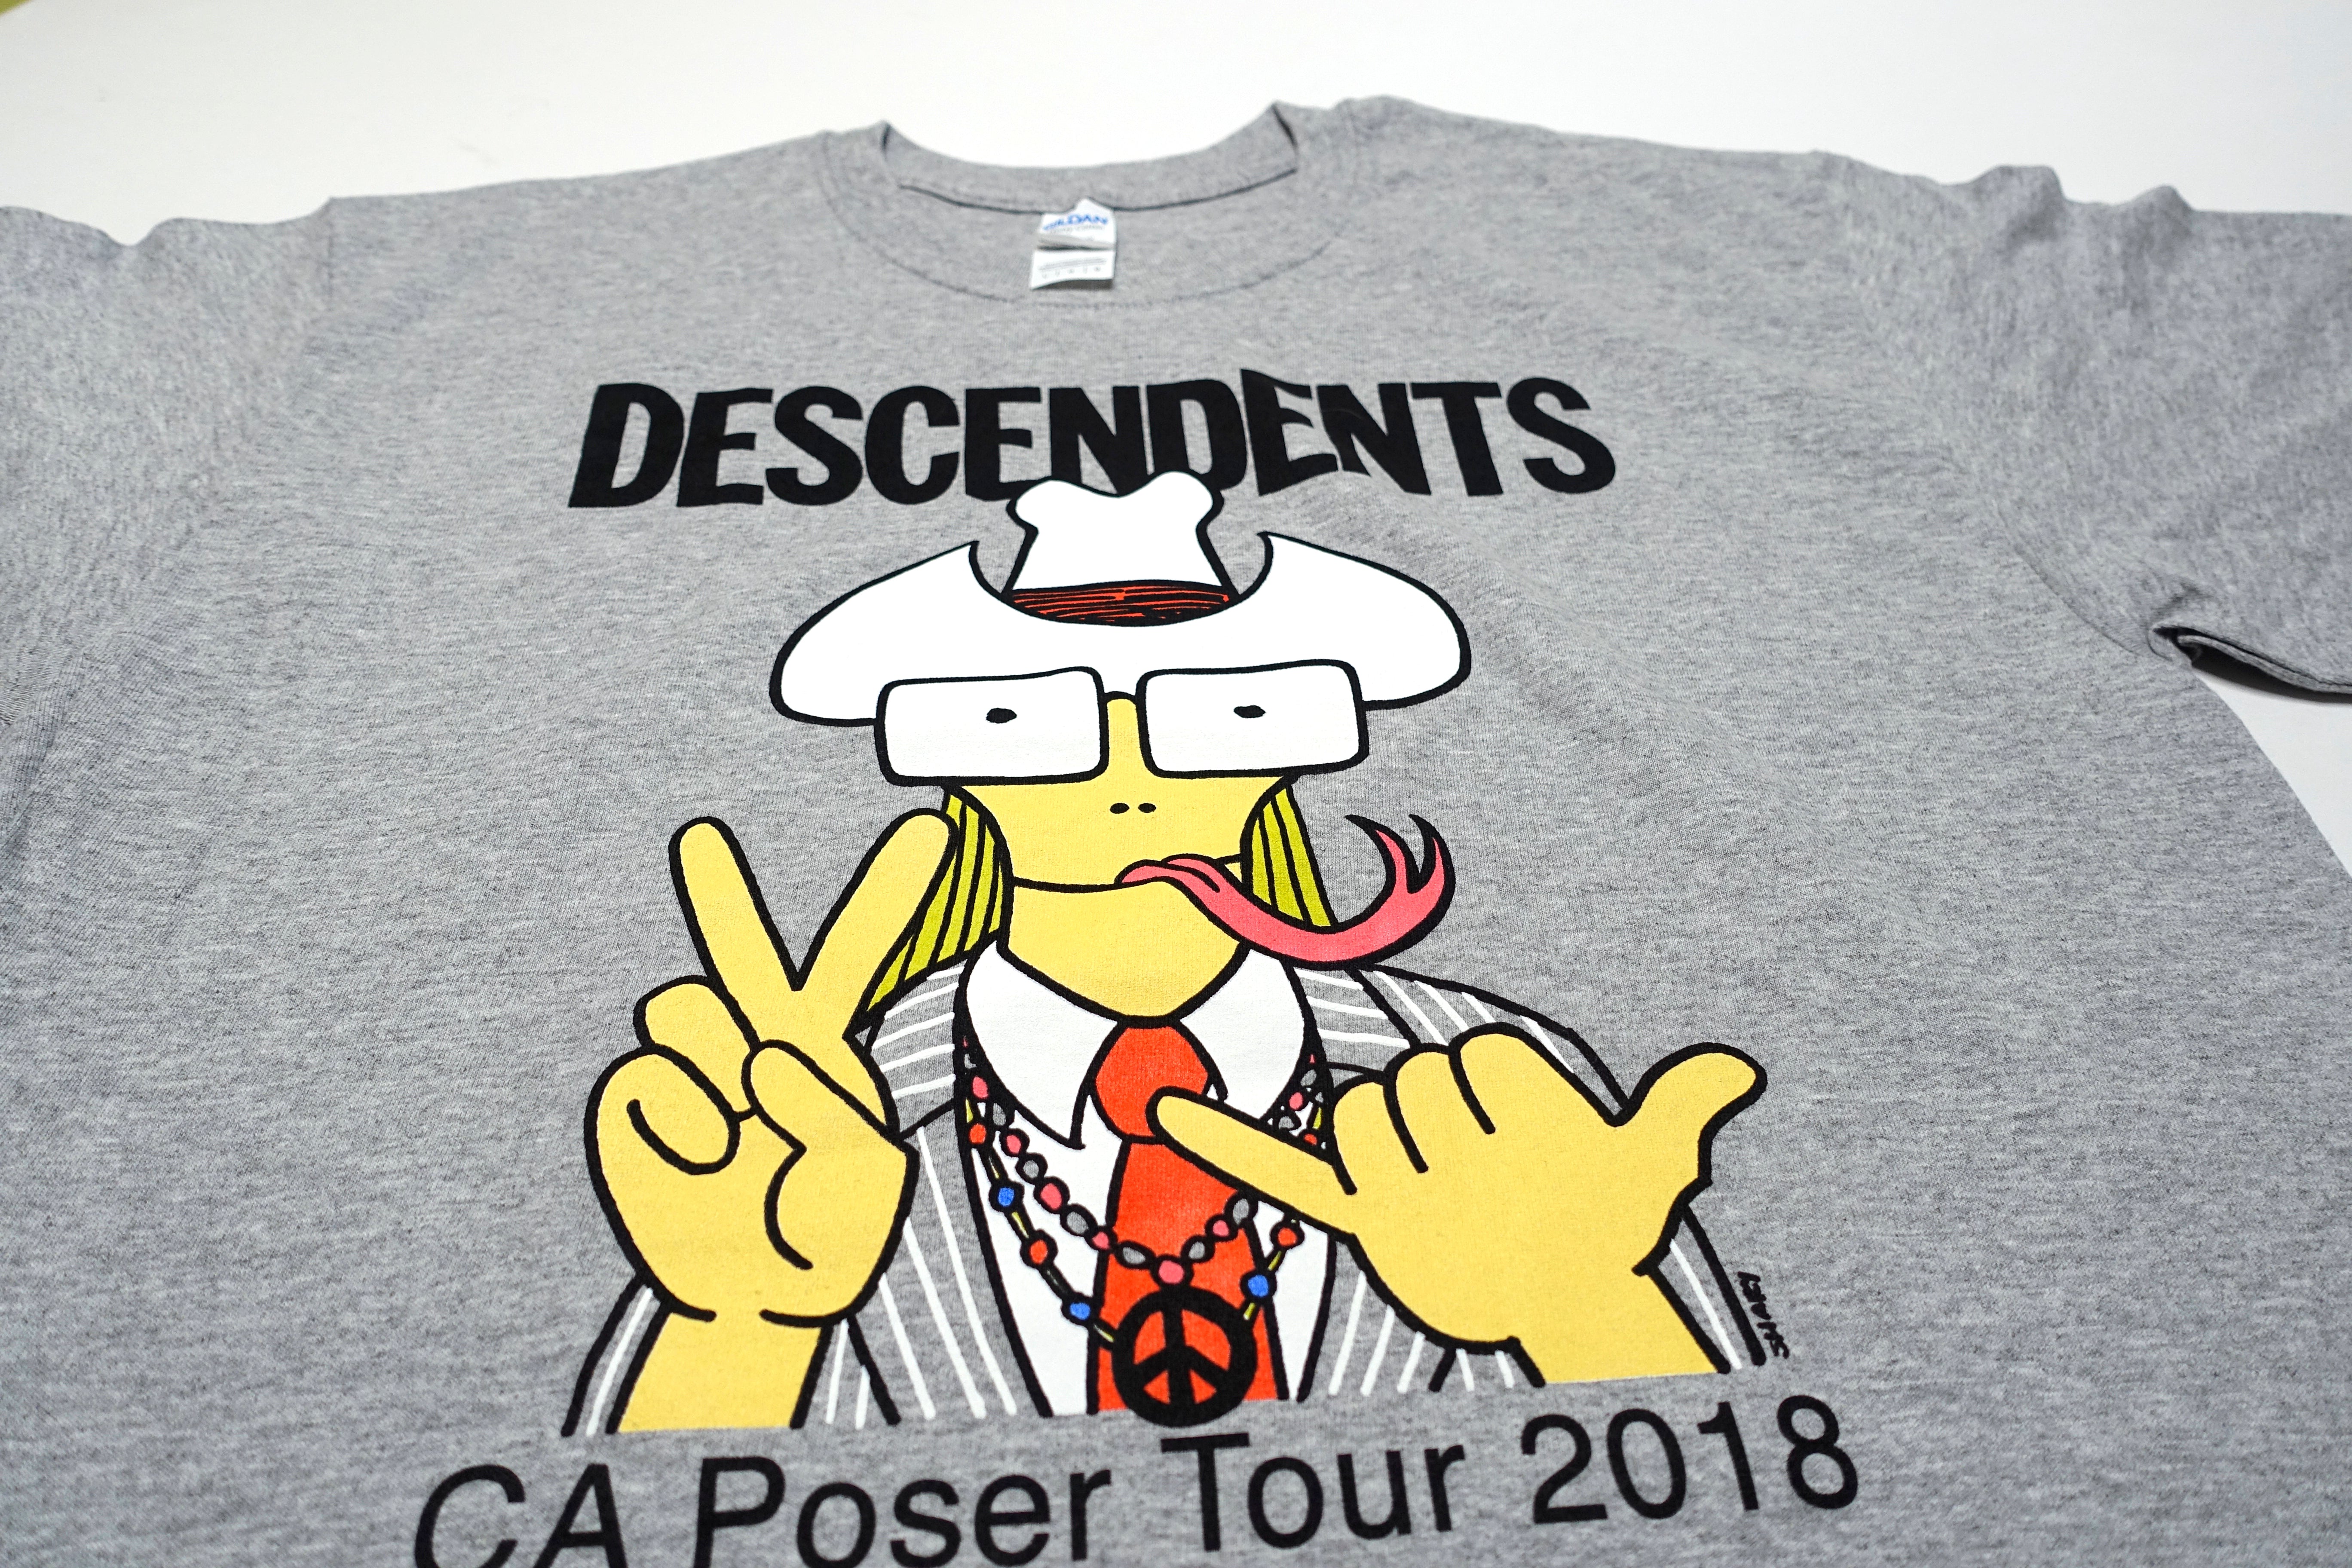 Descendents - California Poser Tour 2018 Tour Shirt Size Large